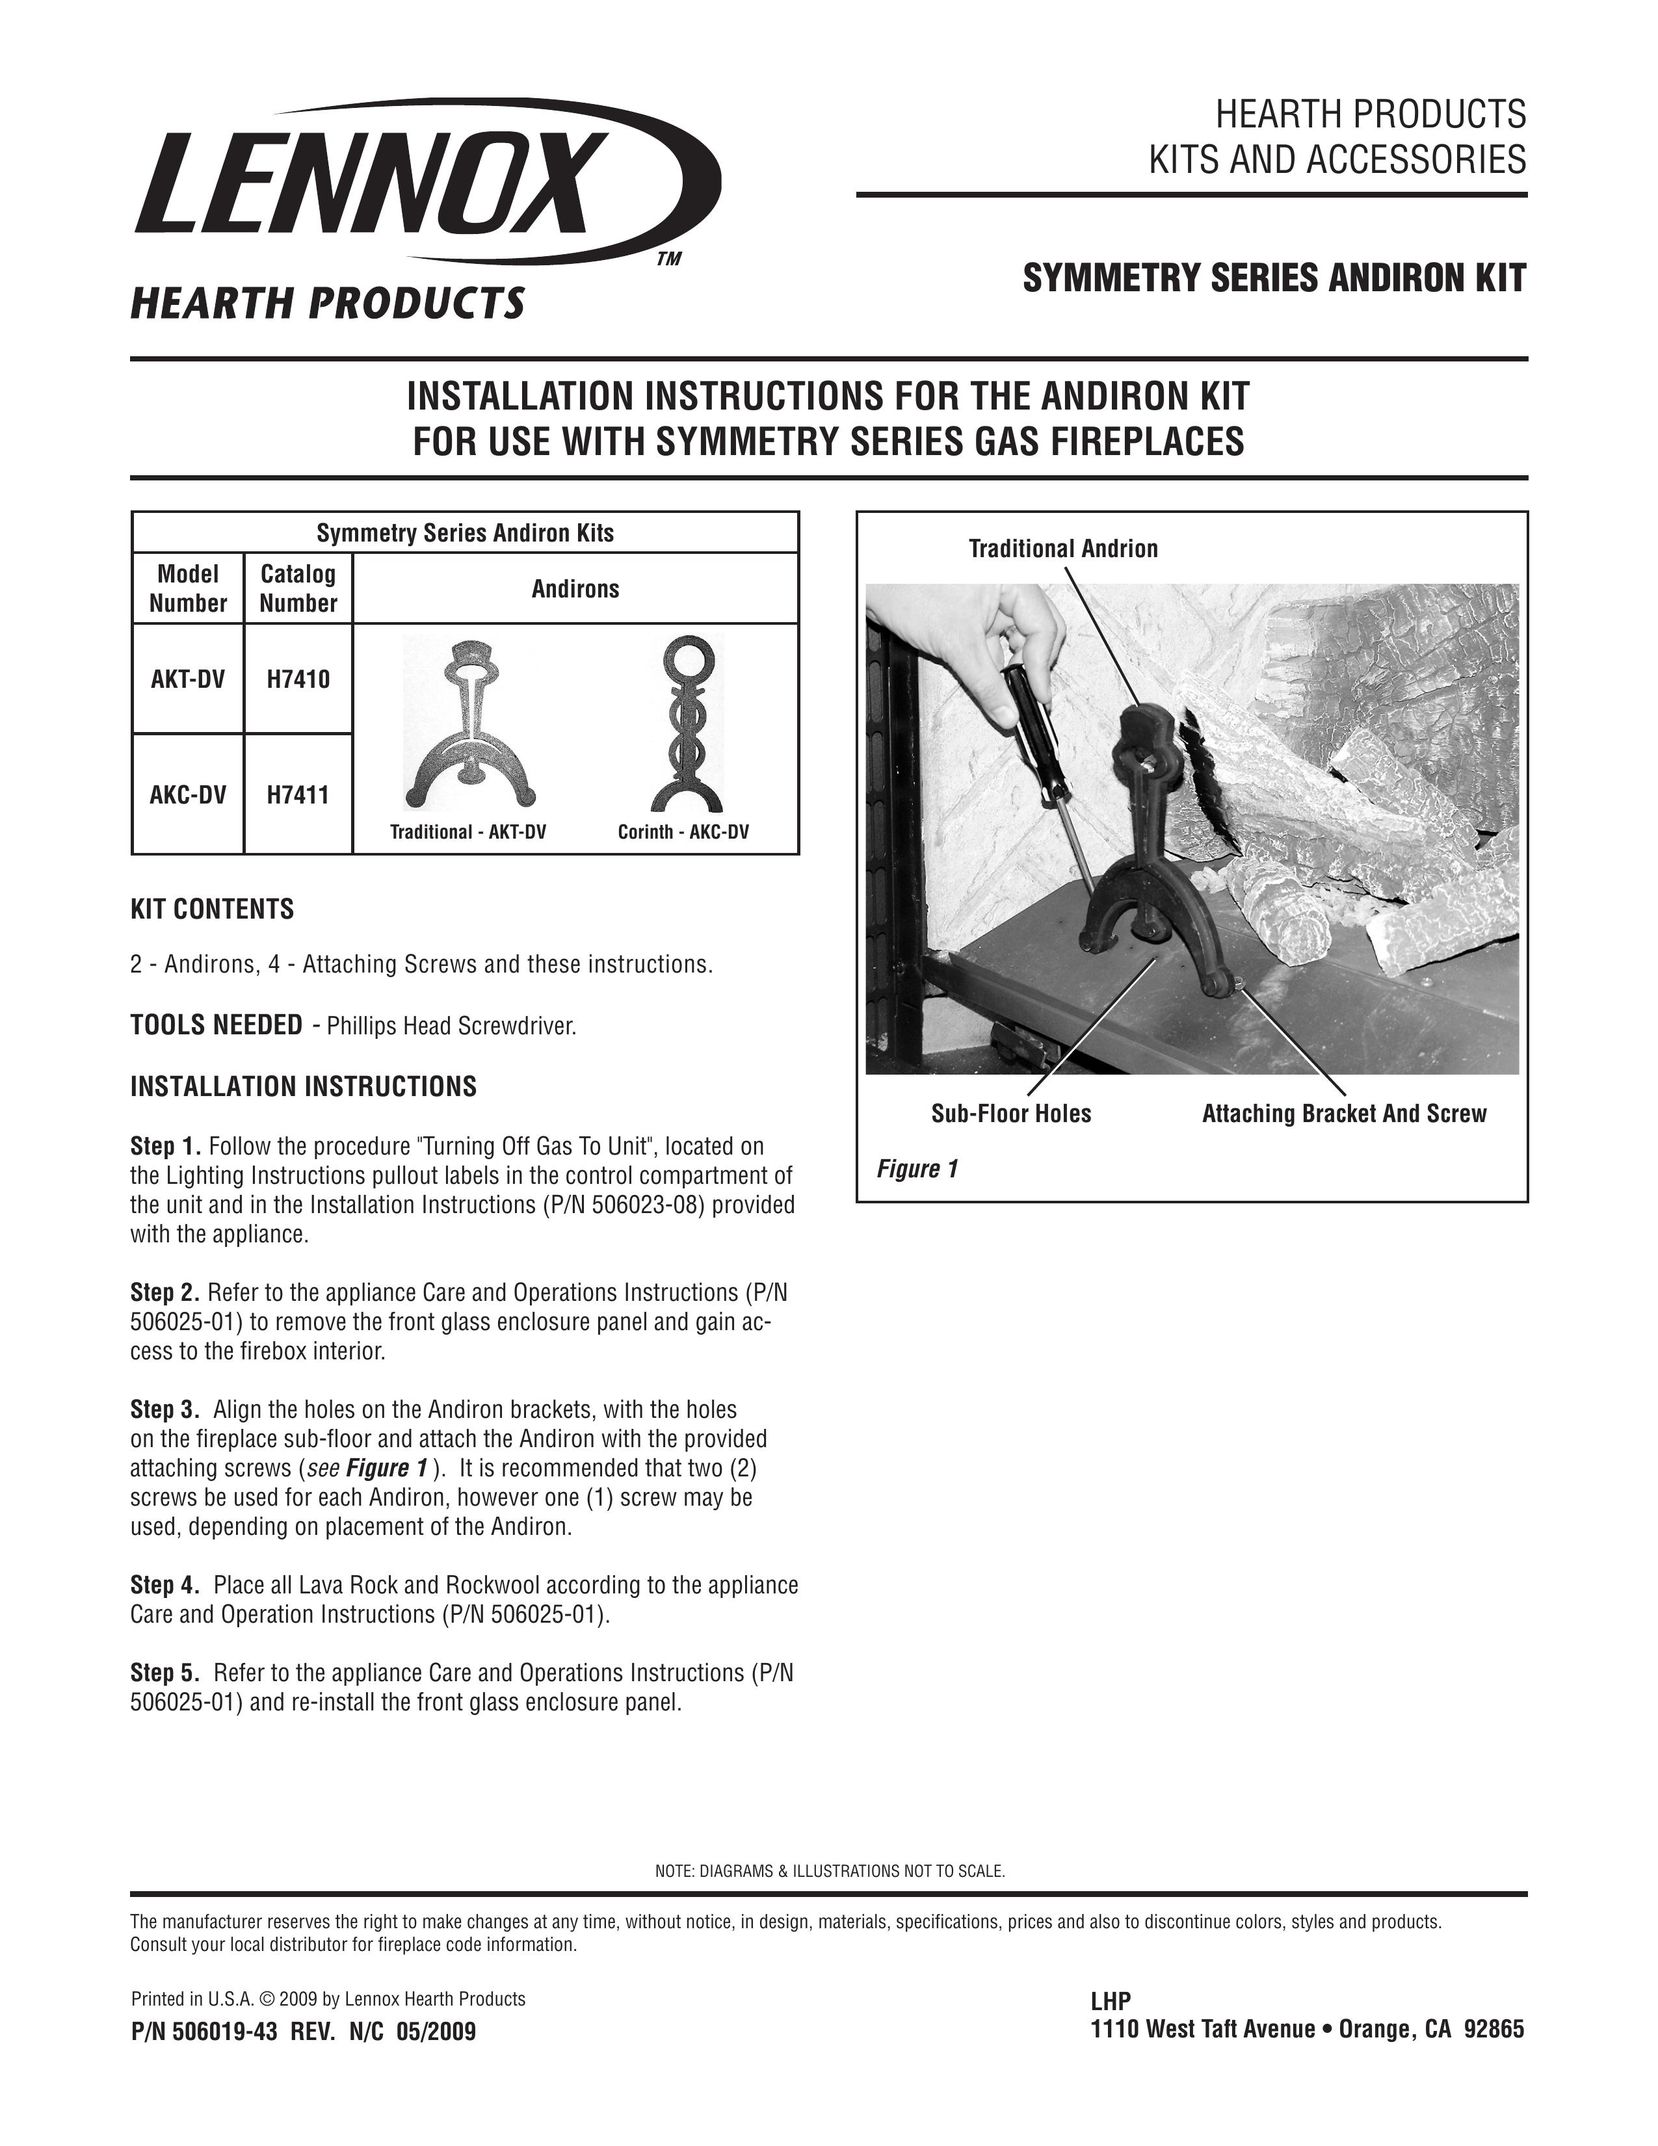 Lennox Hearth AKC-DV Indoor Fireplace User Manual